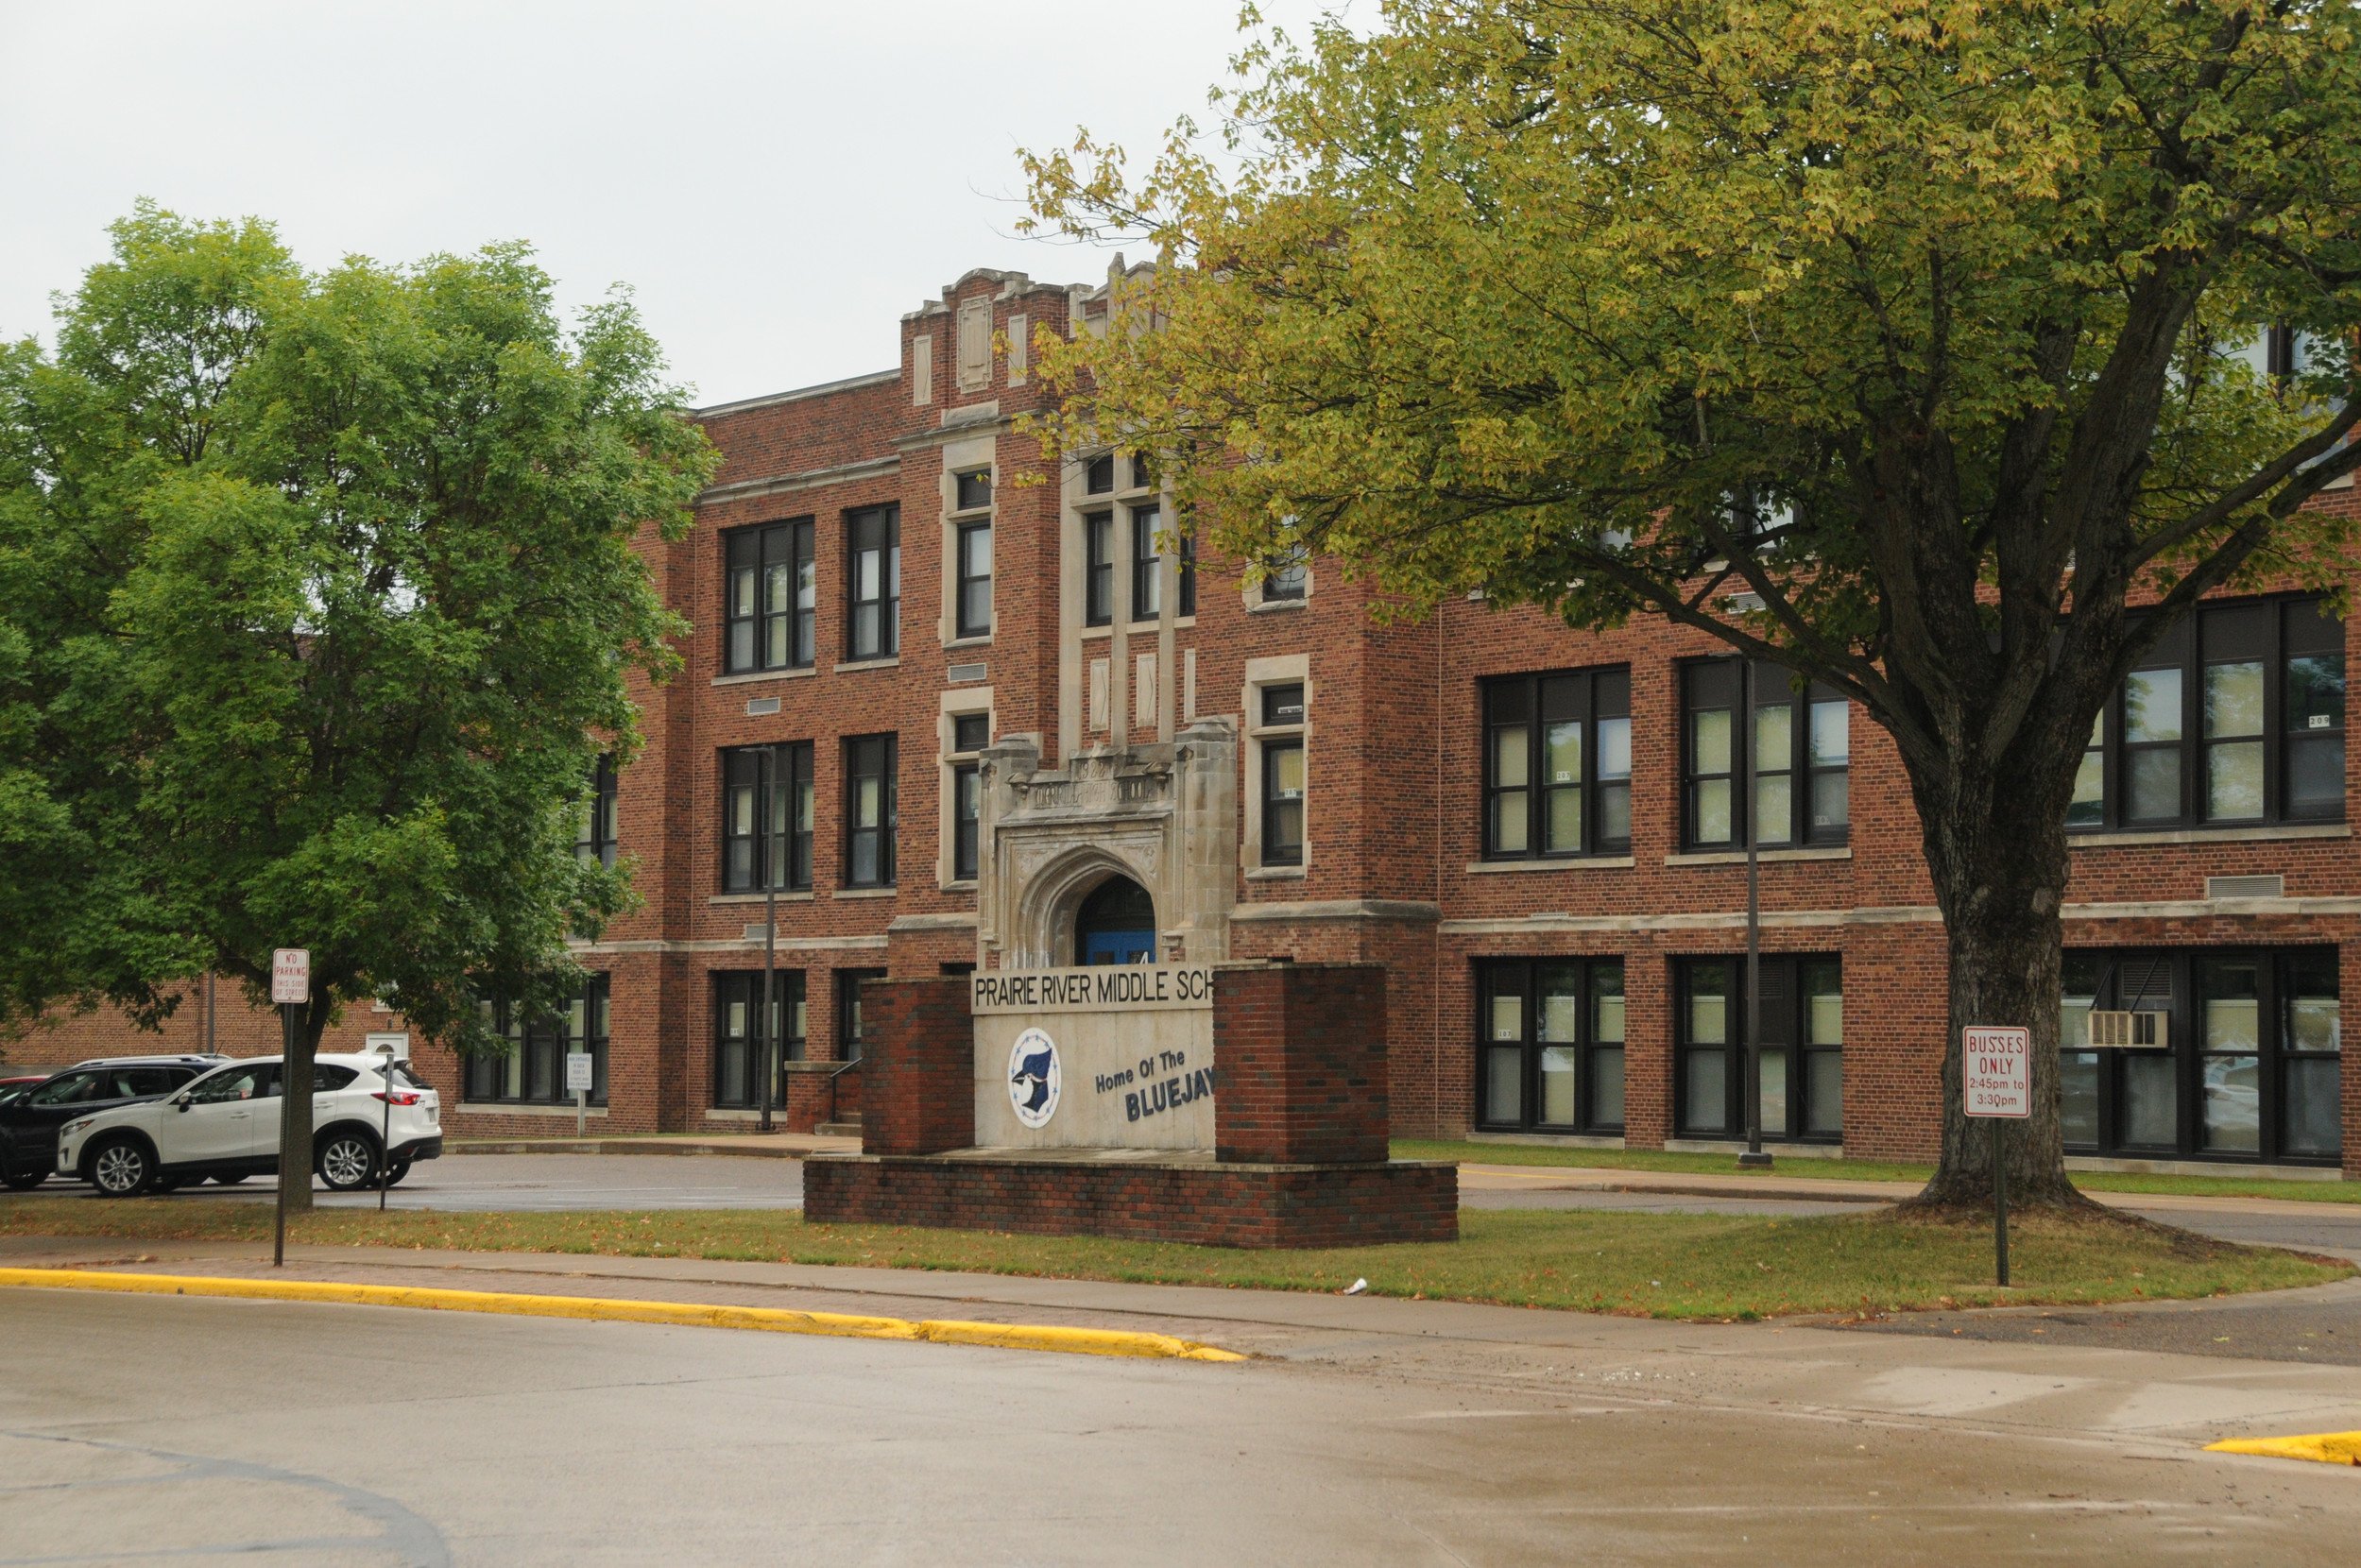 Prairie River Middle School